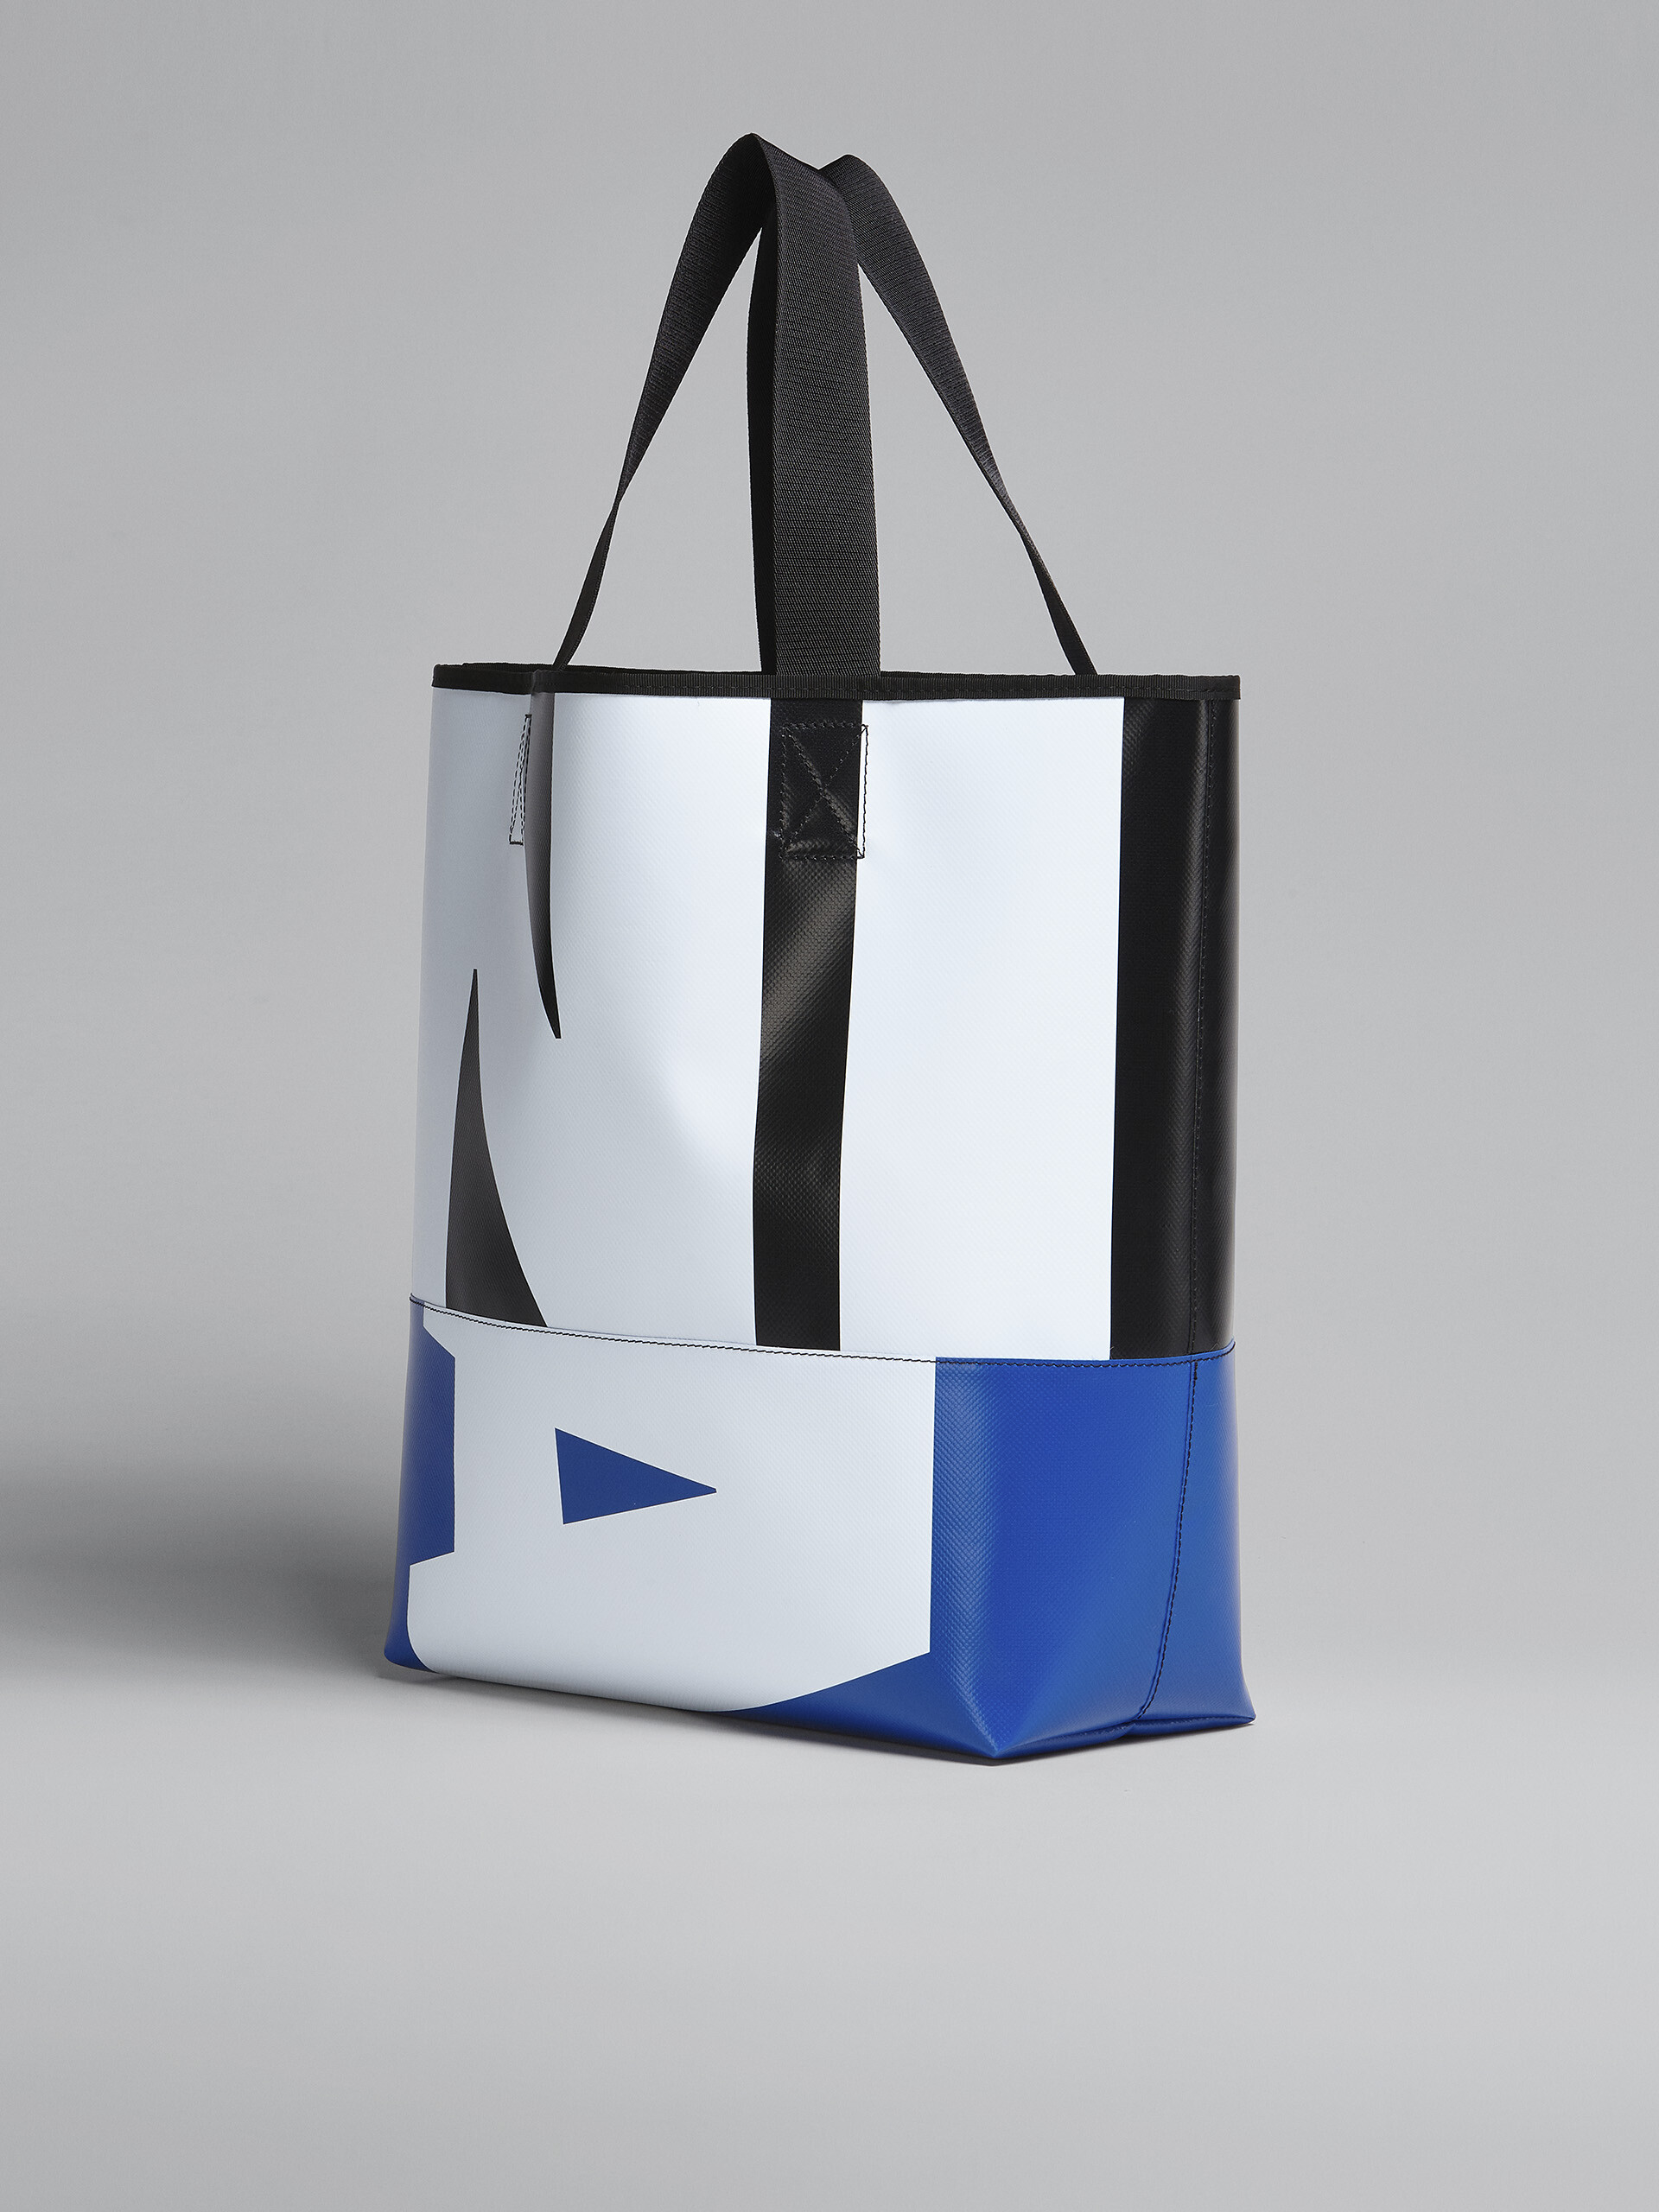 TRIBECA logo shopping bag - Shopping Bags - Image 3